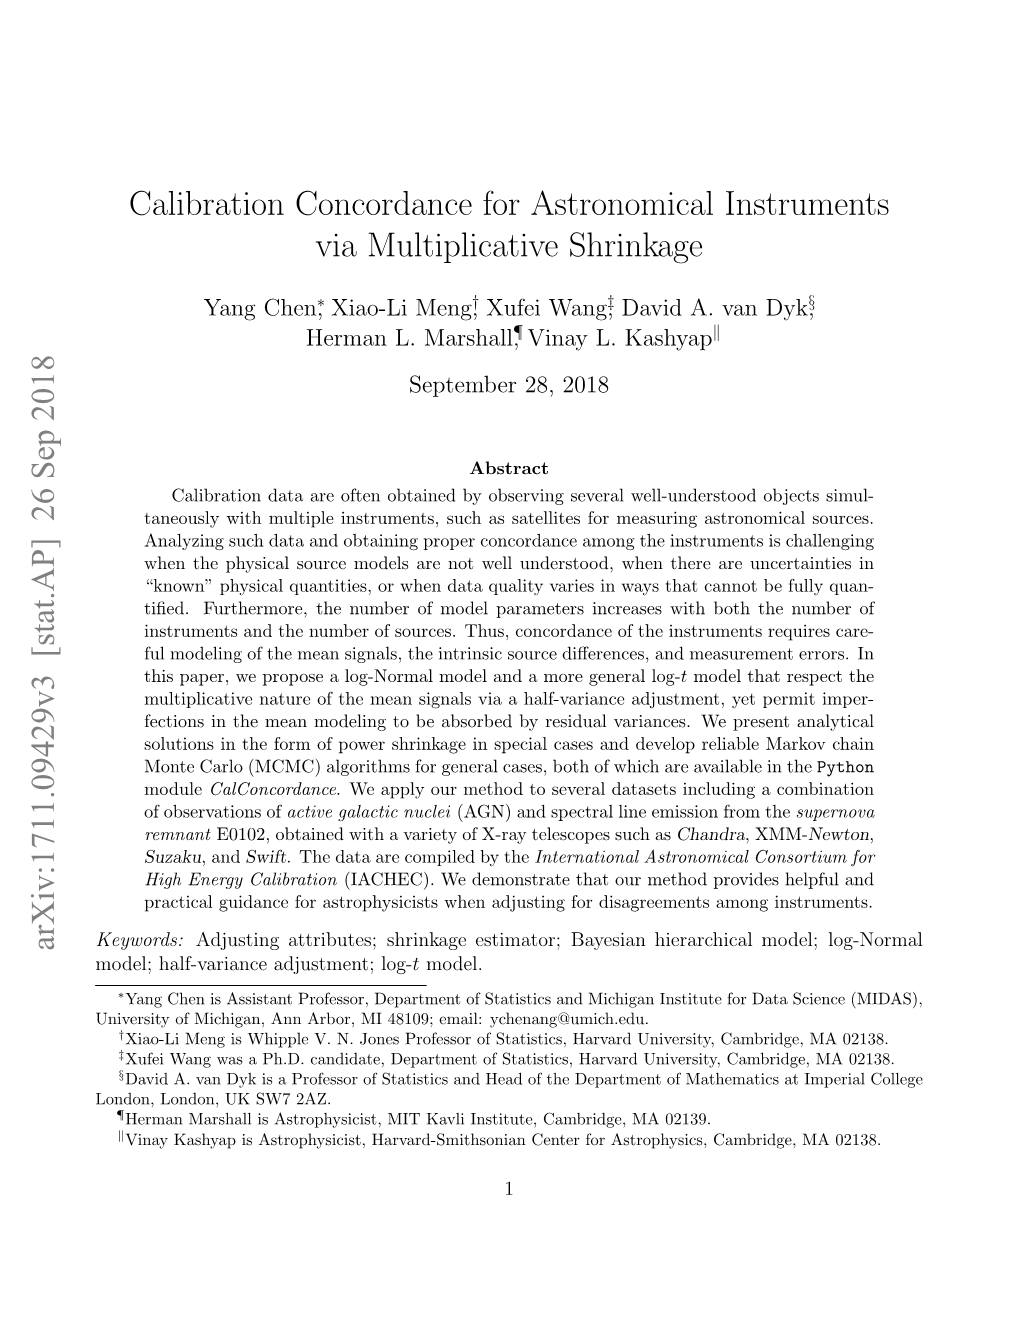 Calibration Concordance for Astronomical Instruments Via Multiplicative Shrinkage Arxiv:1711.09429V3 [Stat.AP] 26 Sep 2018